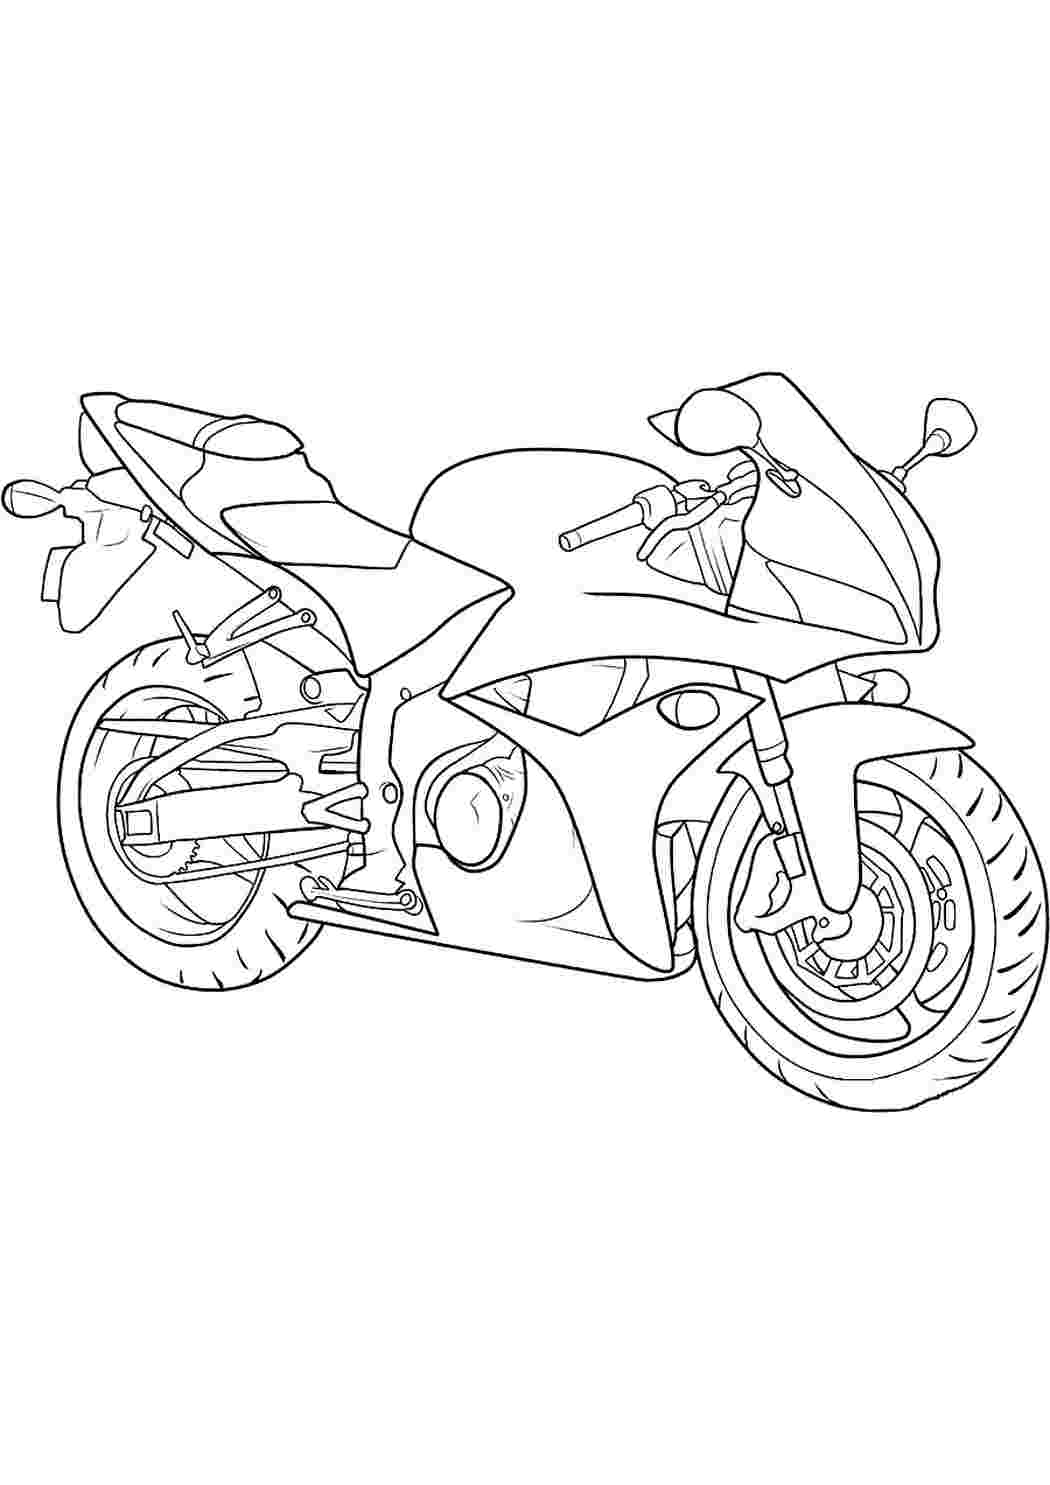 Мини рисунки для срисовки мотоциклы